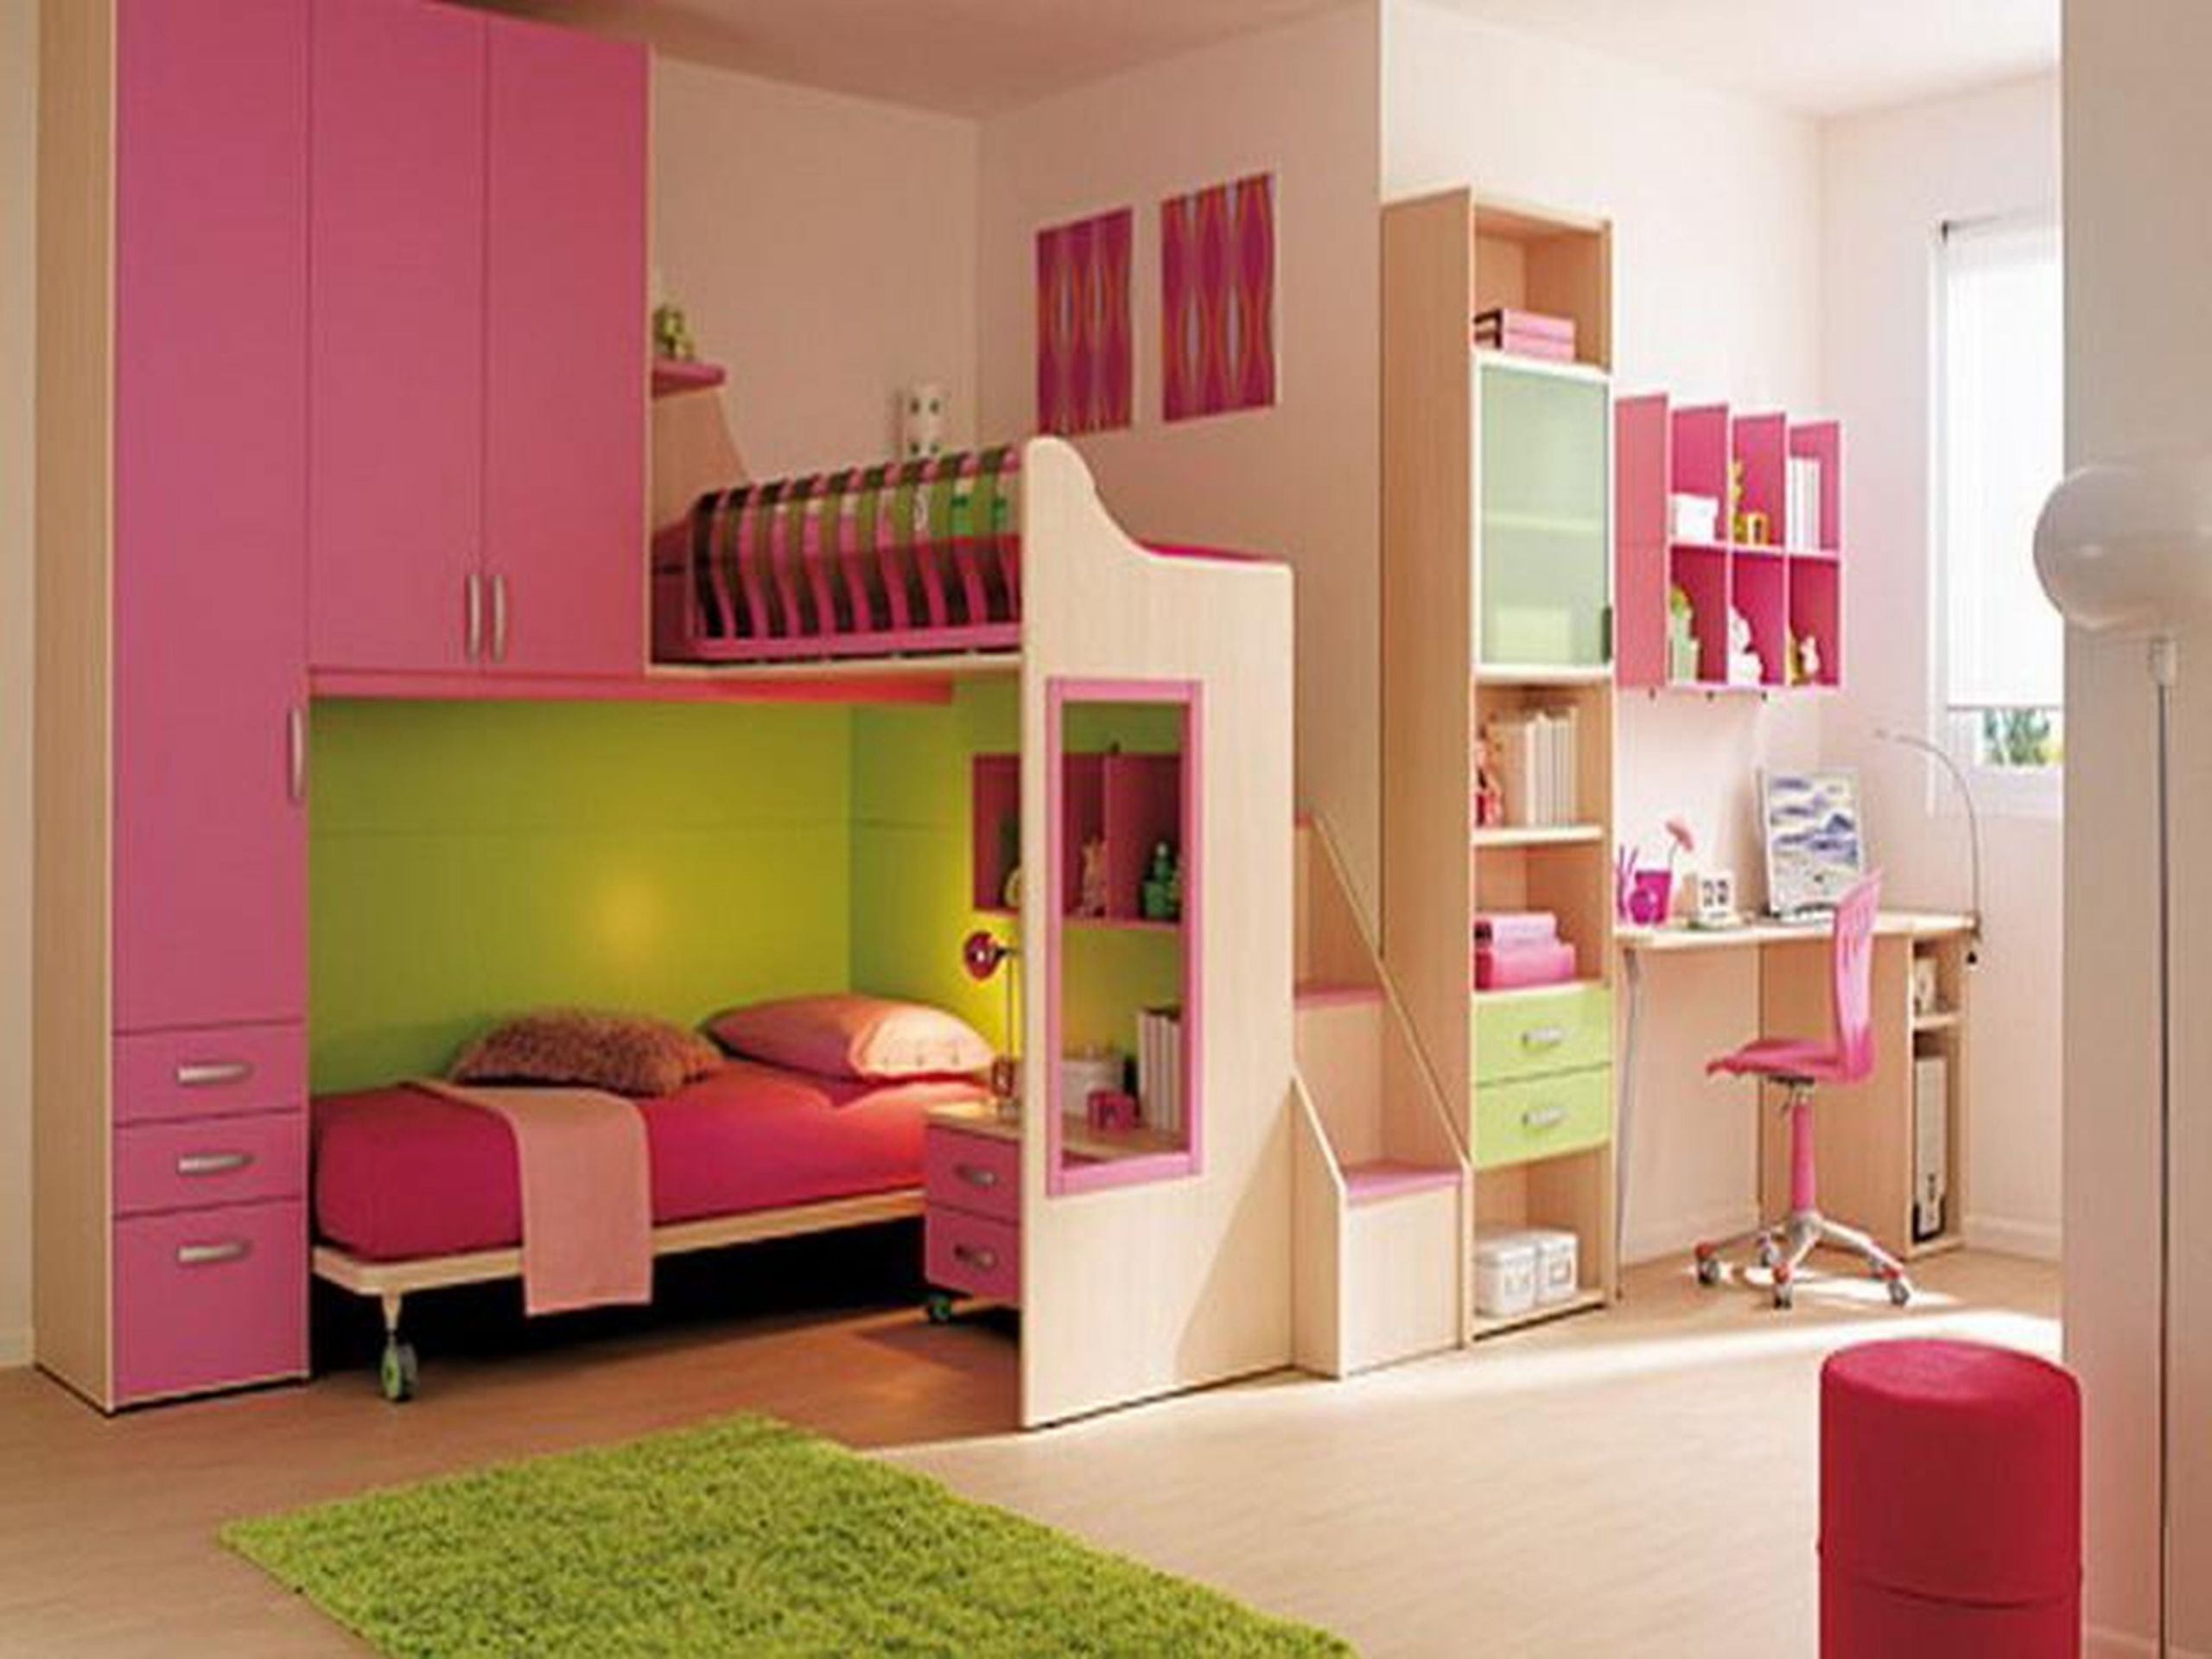 Diy Bedroom Storage
 DIY Storage Ideas For Kids Room Crafts To Do With Kids